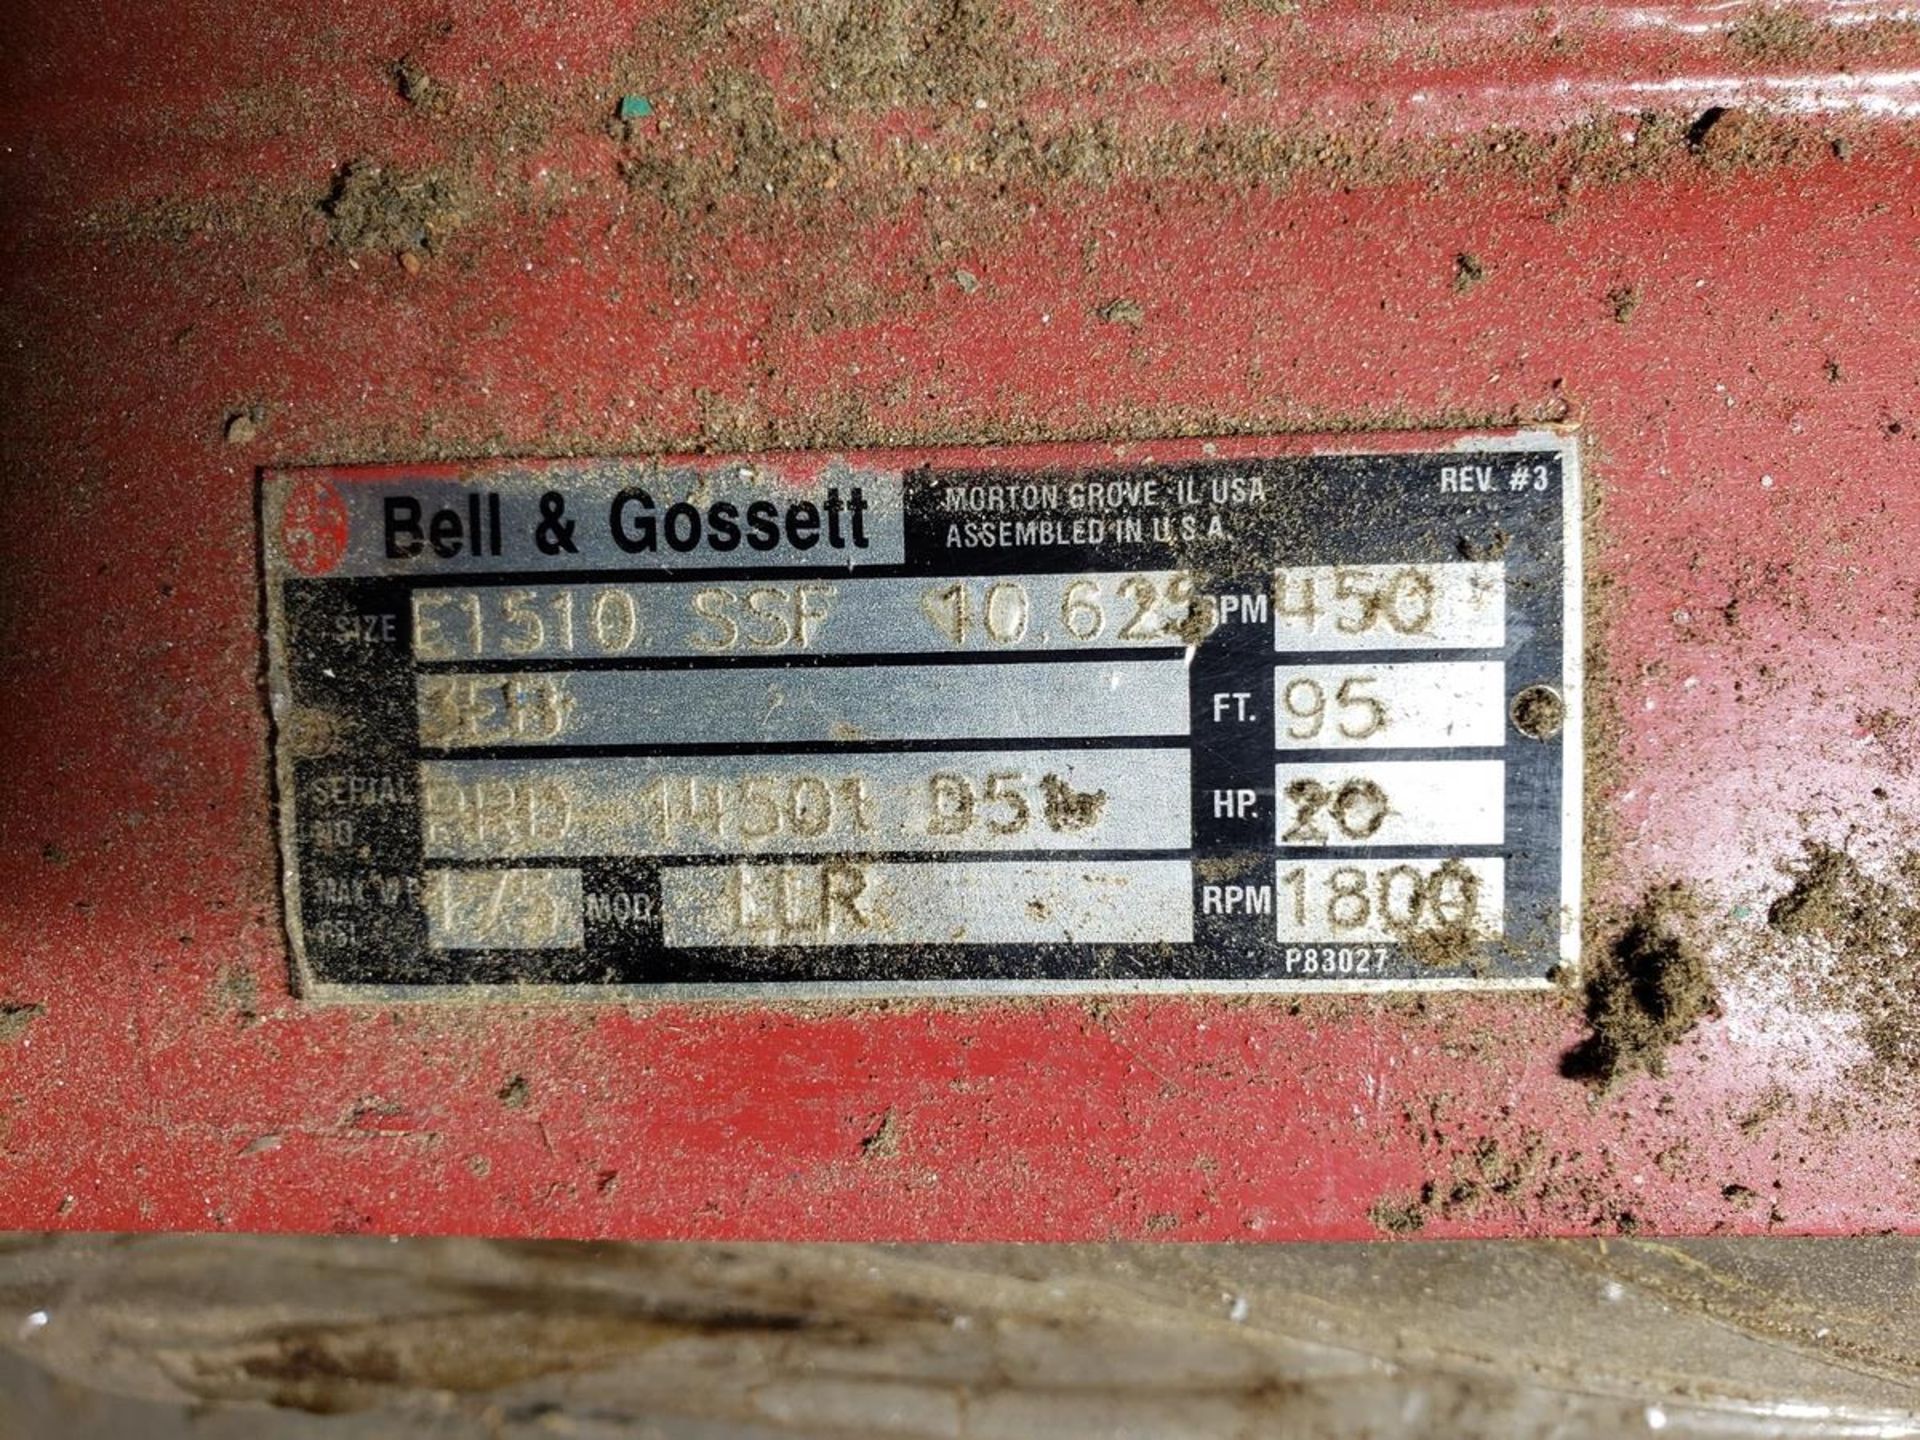 Bell & Gossett Circulating Pump Skid, 20 HP Rig Fee: $25 - Image 2 of 3